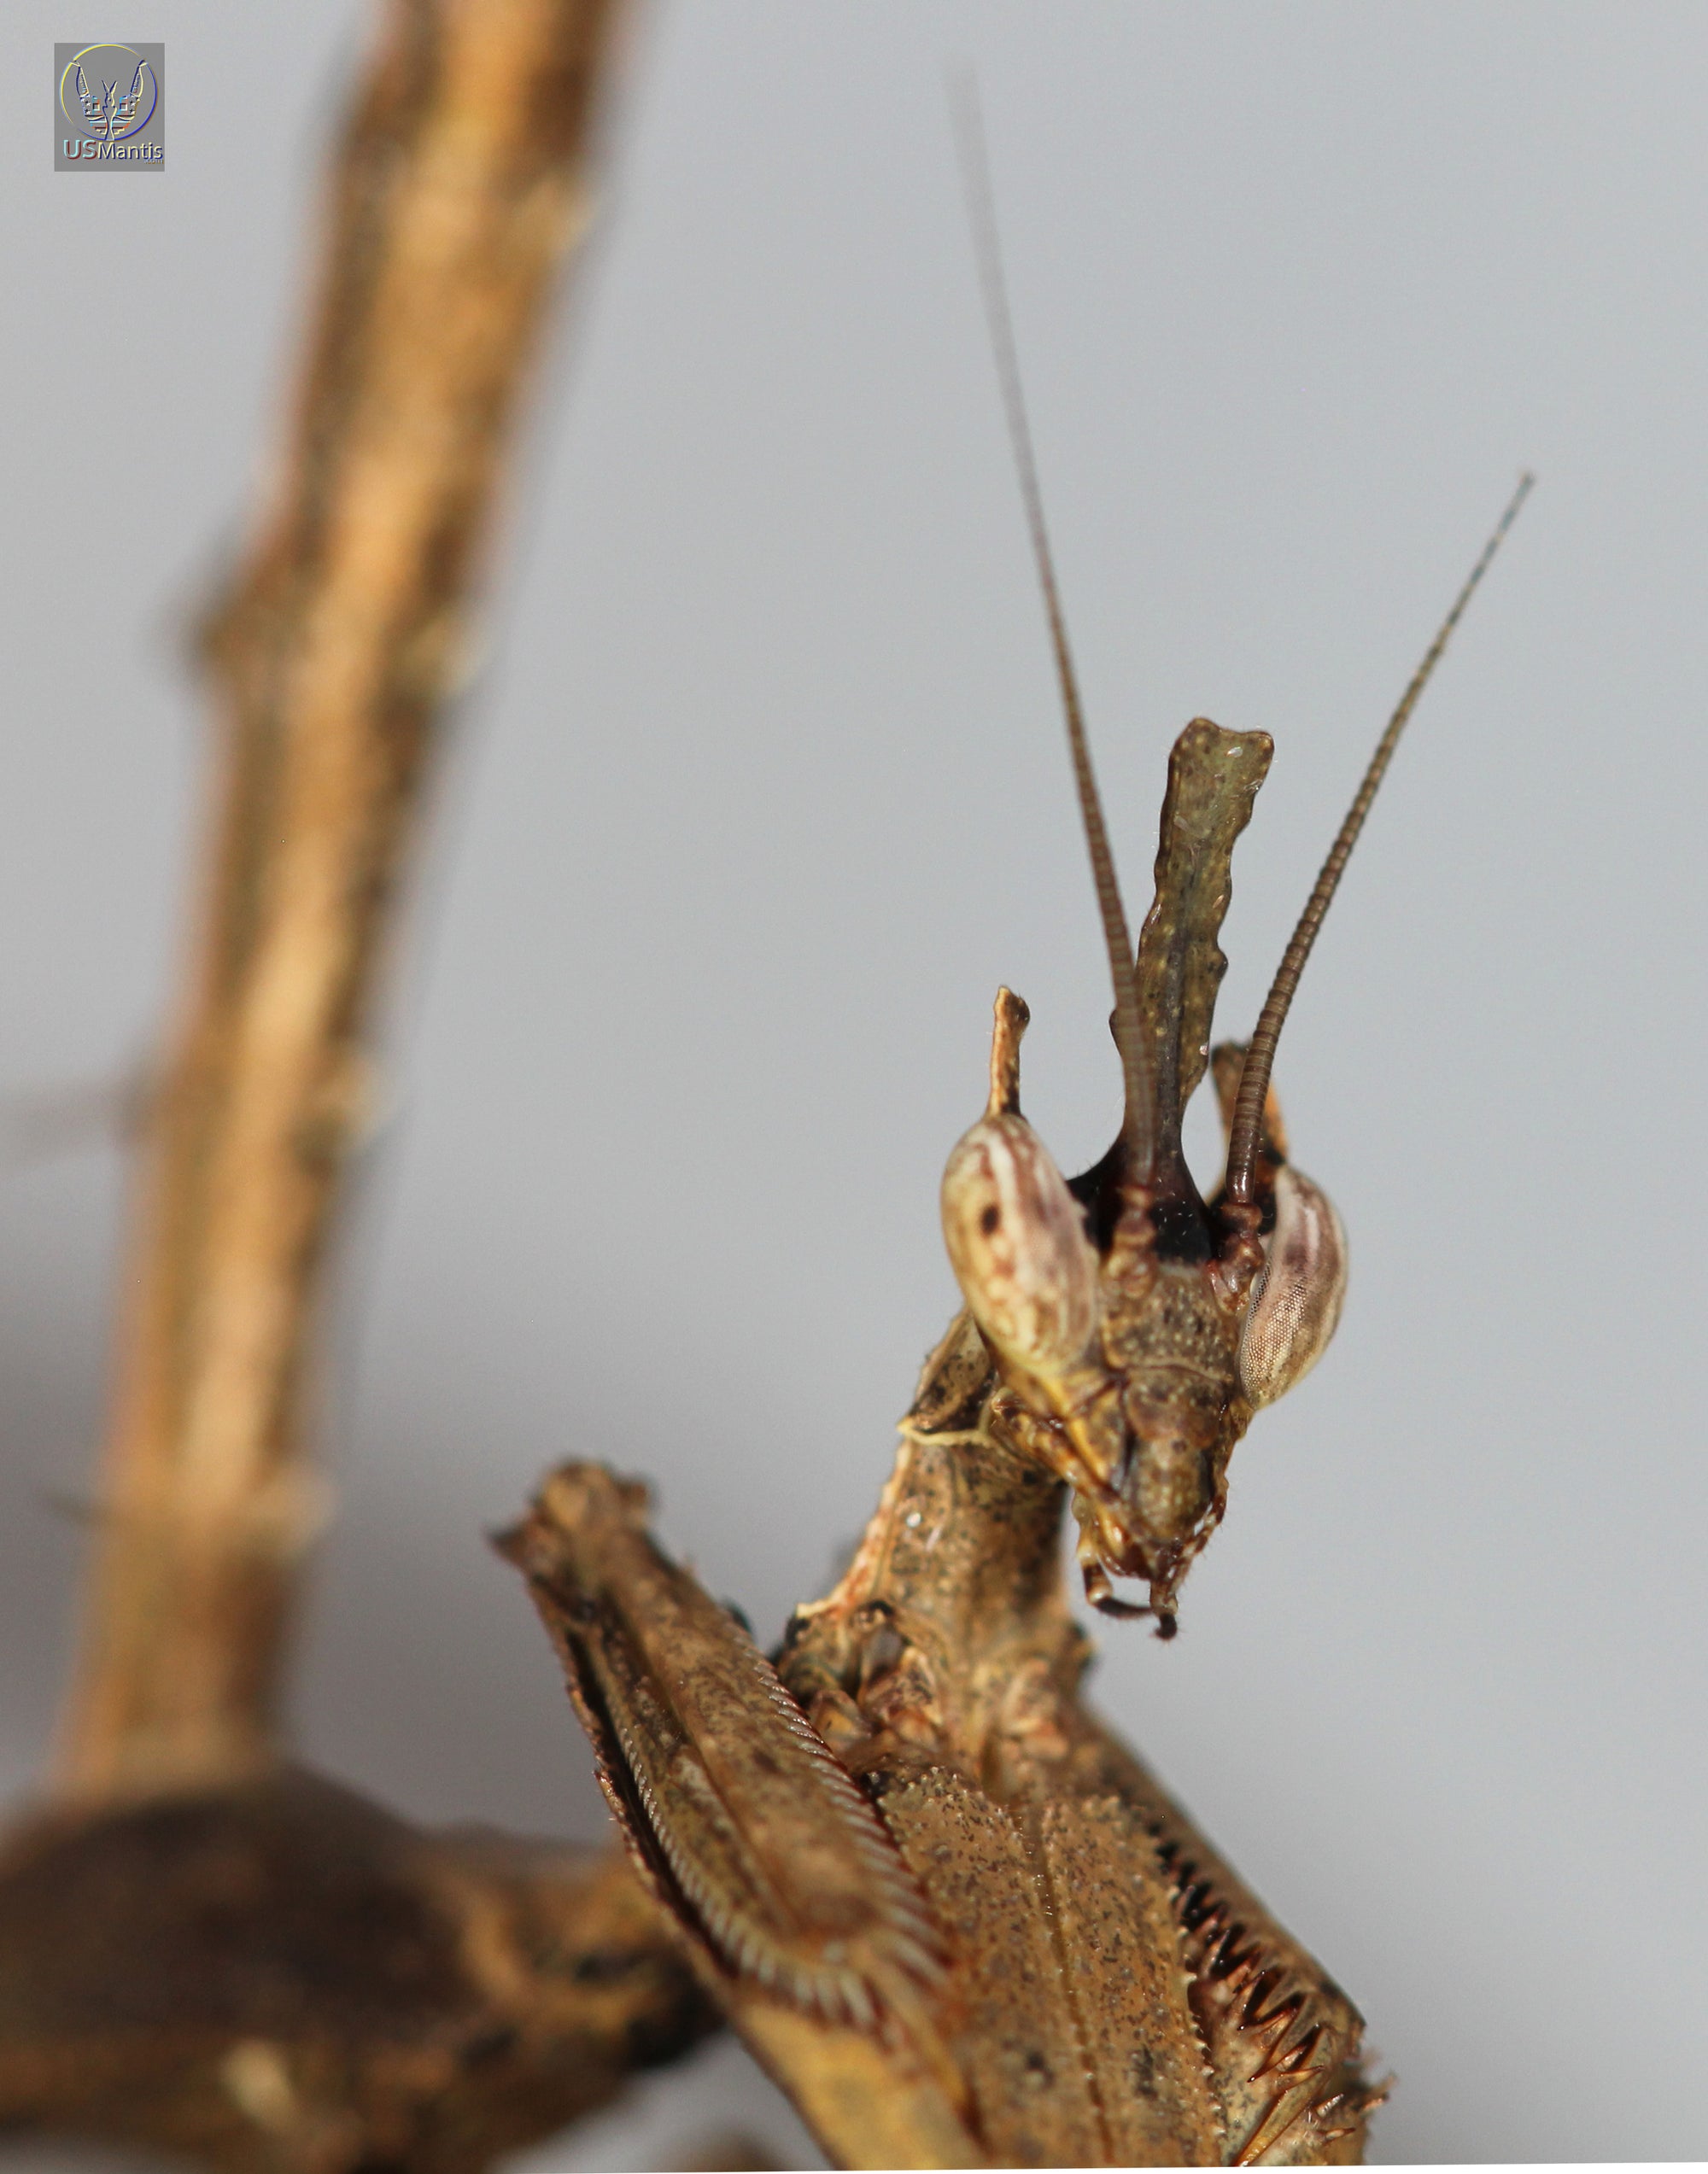 Stenophylla lobivertex "Dragon Mantis", Live Insects - USMantis.com